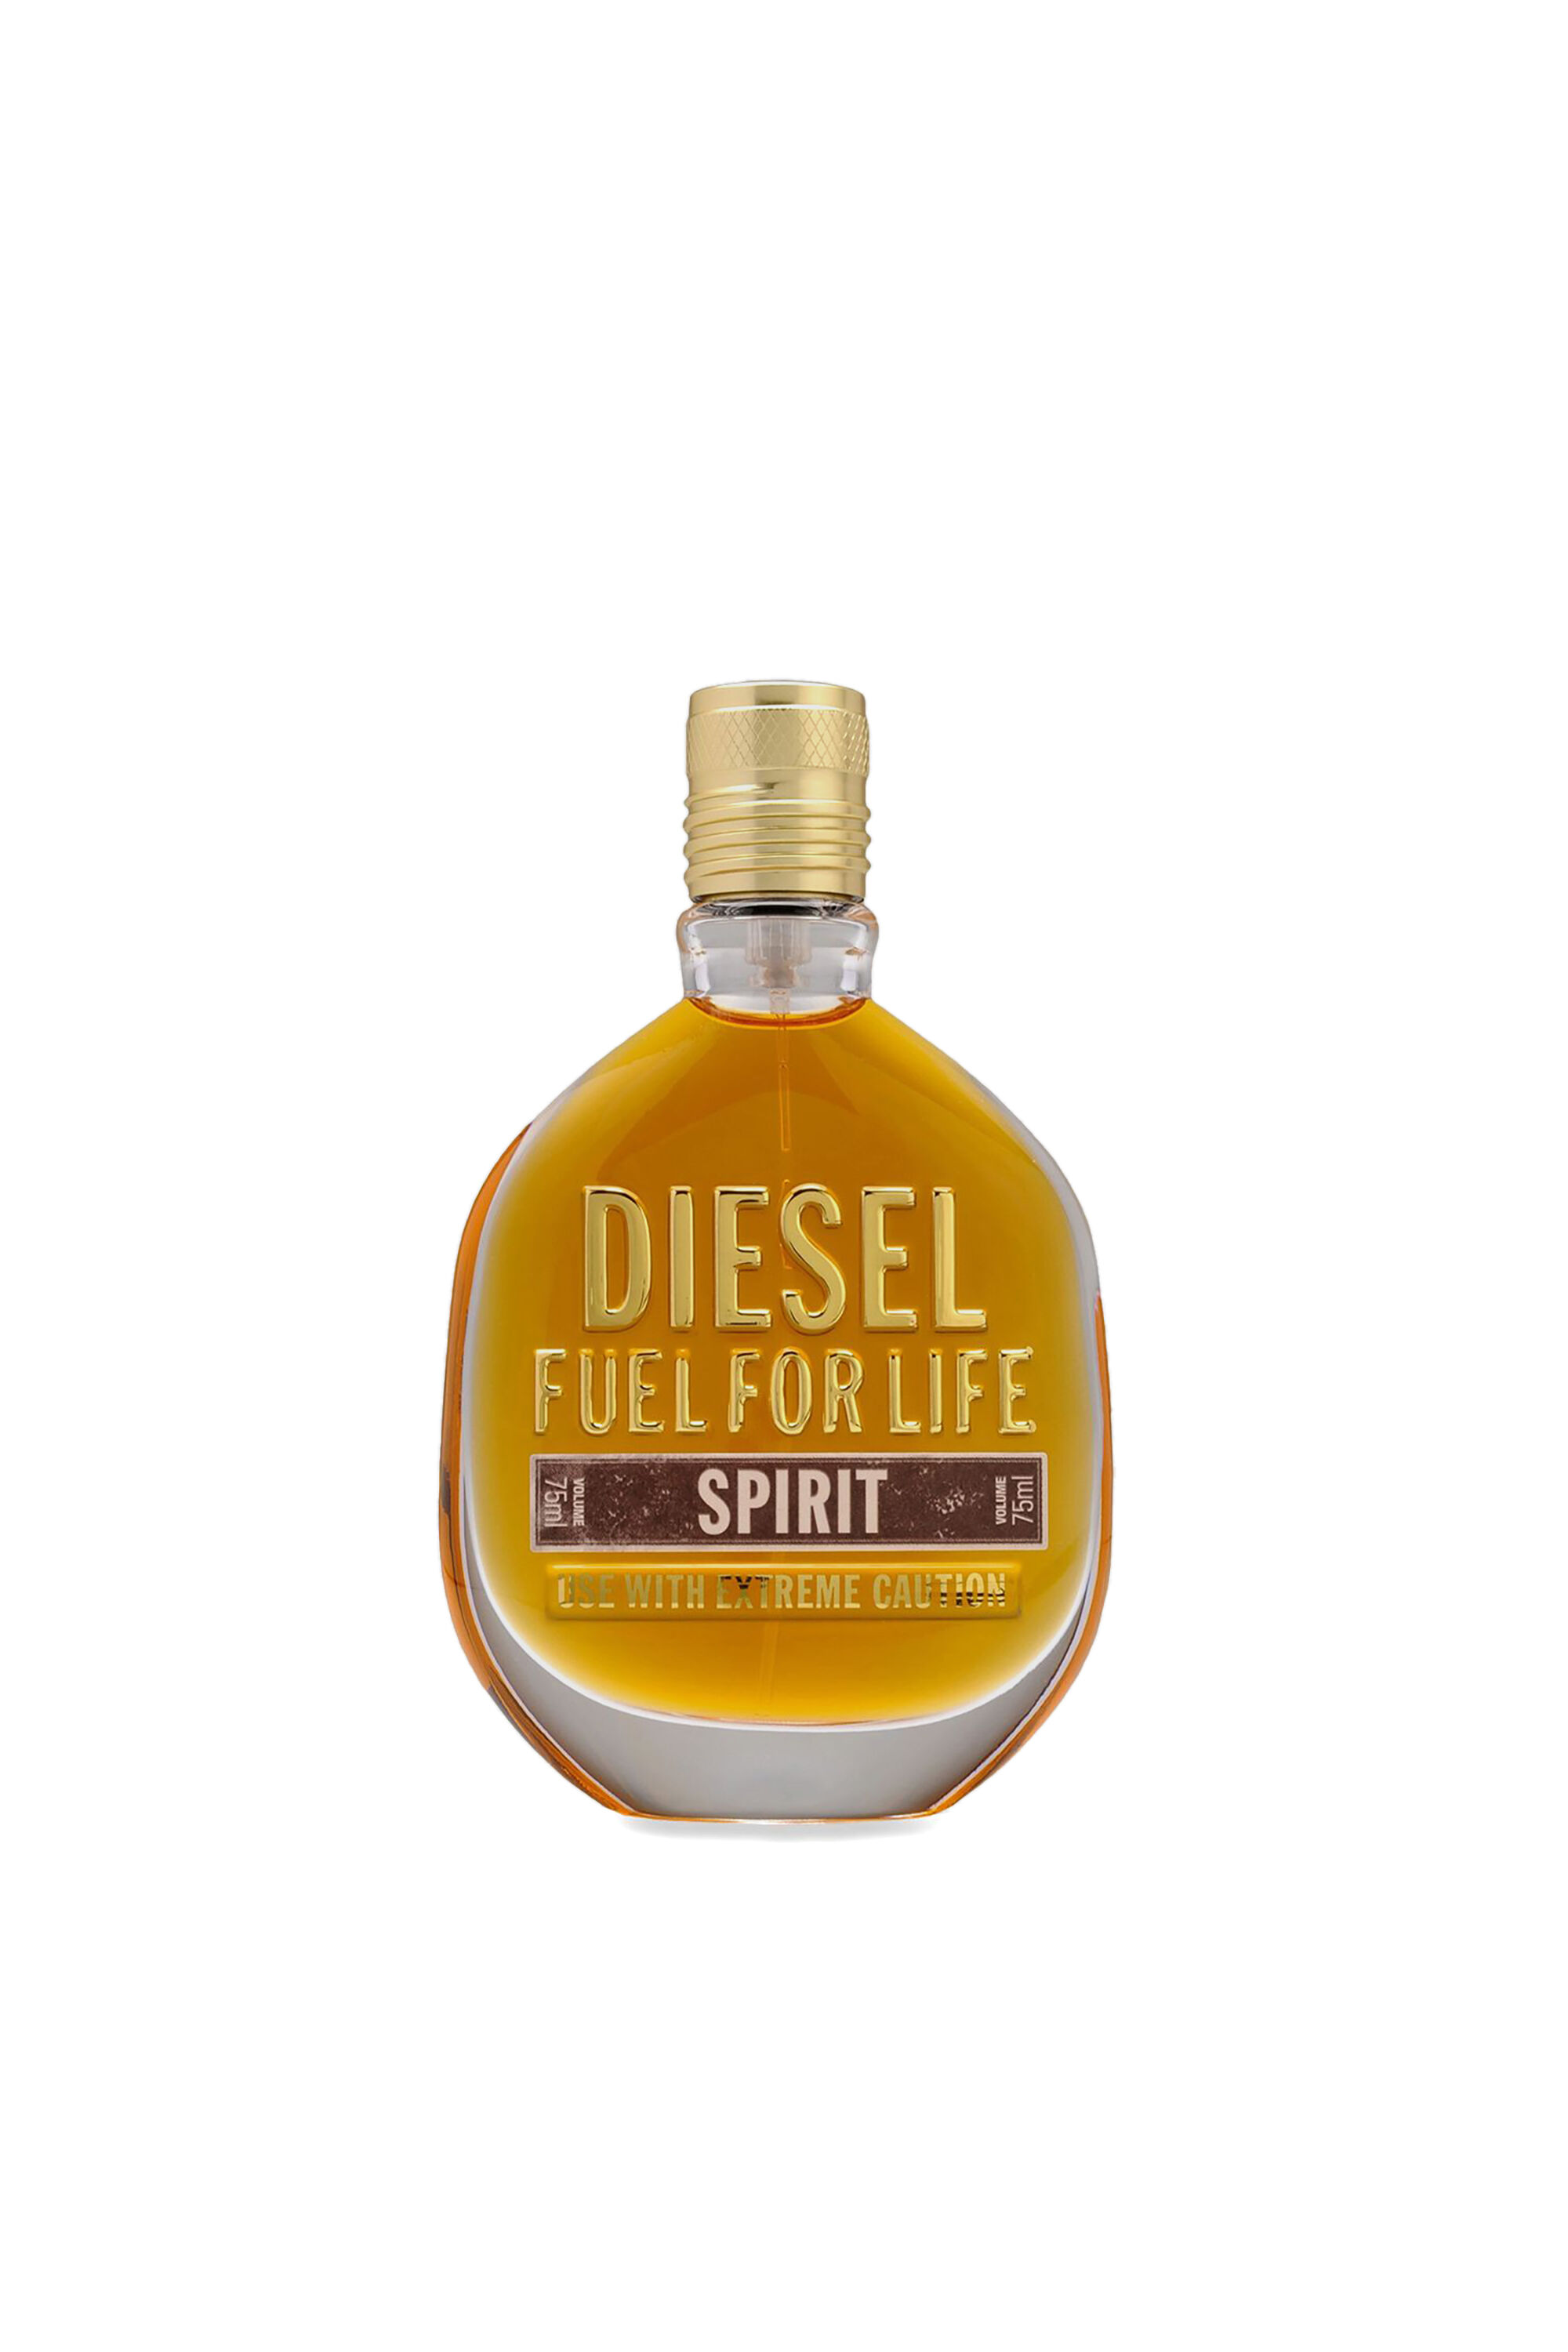 Diesel - FUEL FOR LIFE SPIRIT 75ML,  - Image 2